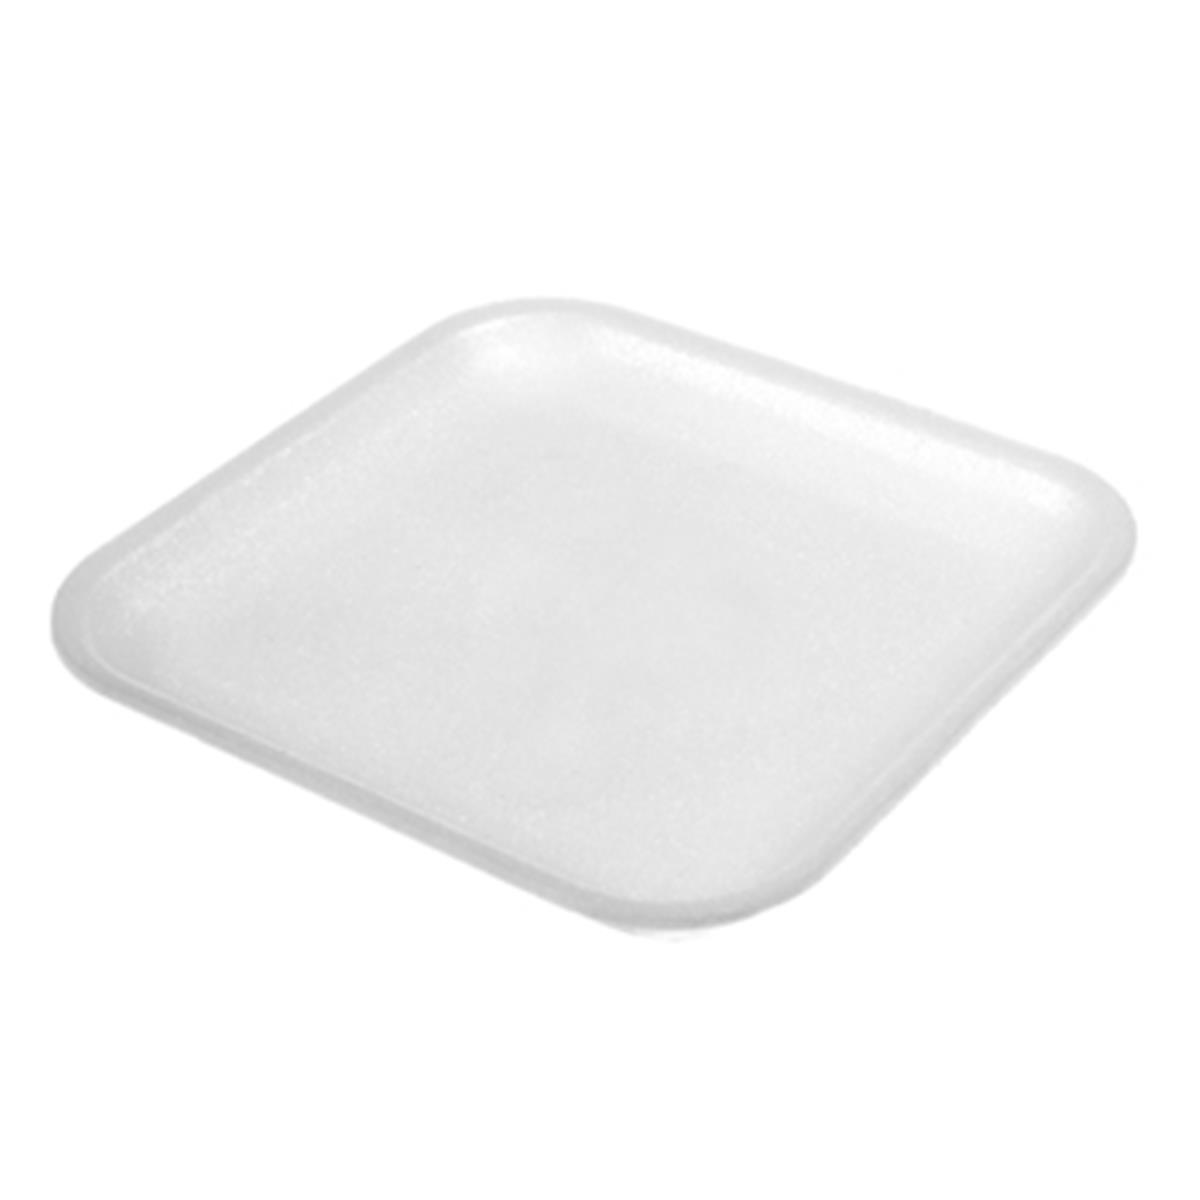 201001sw00 Cpc Foam Tray, White - Case Of 1000